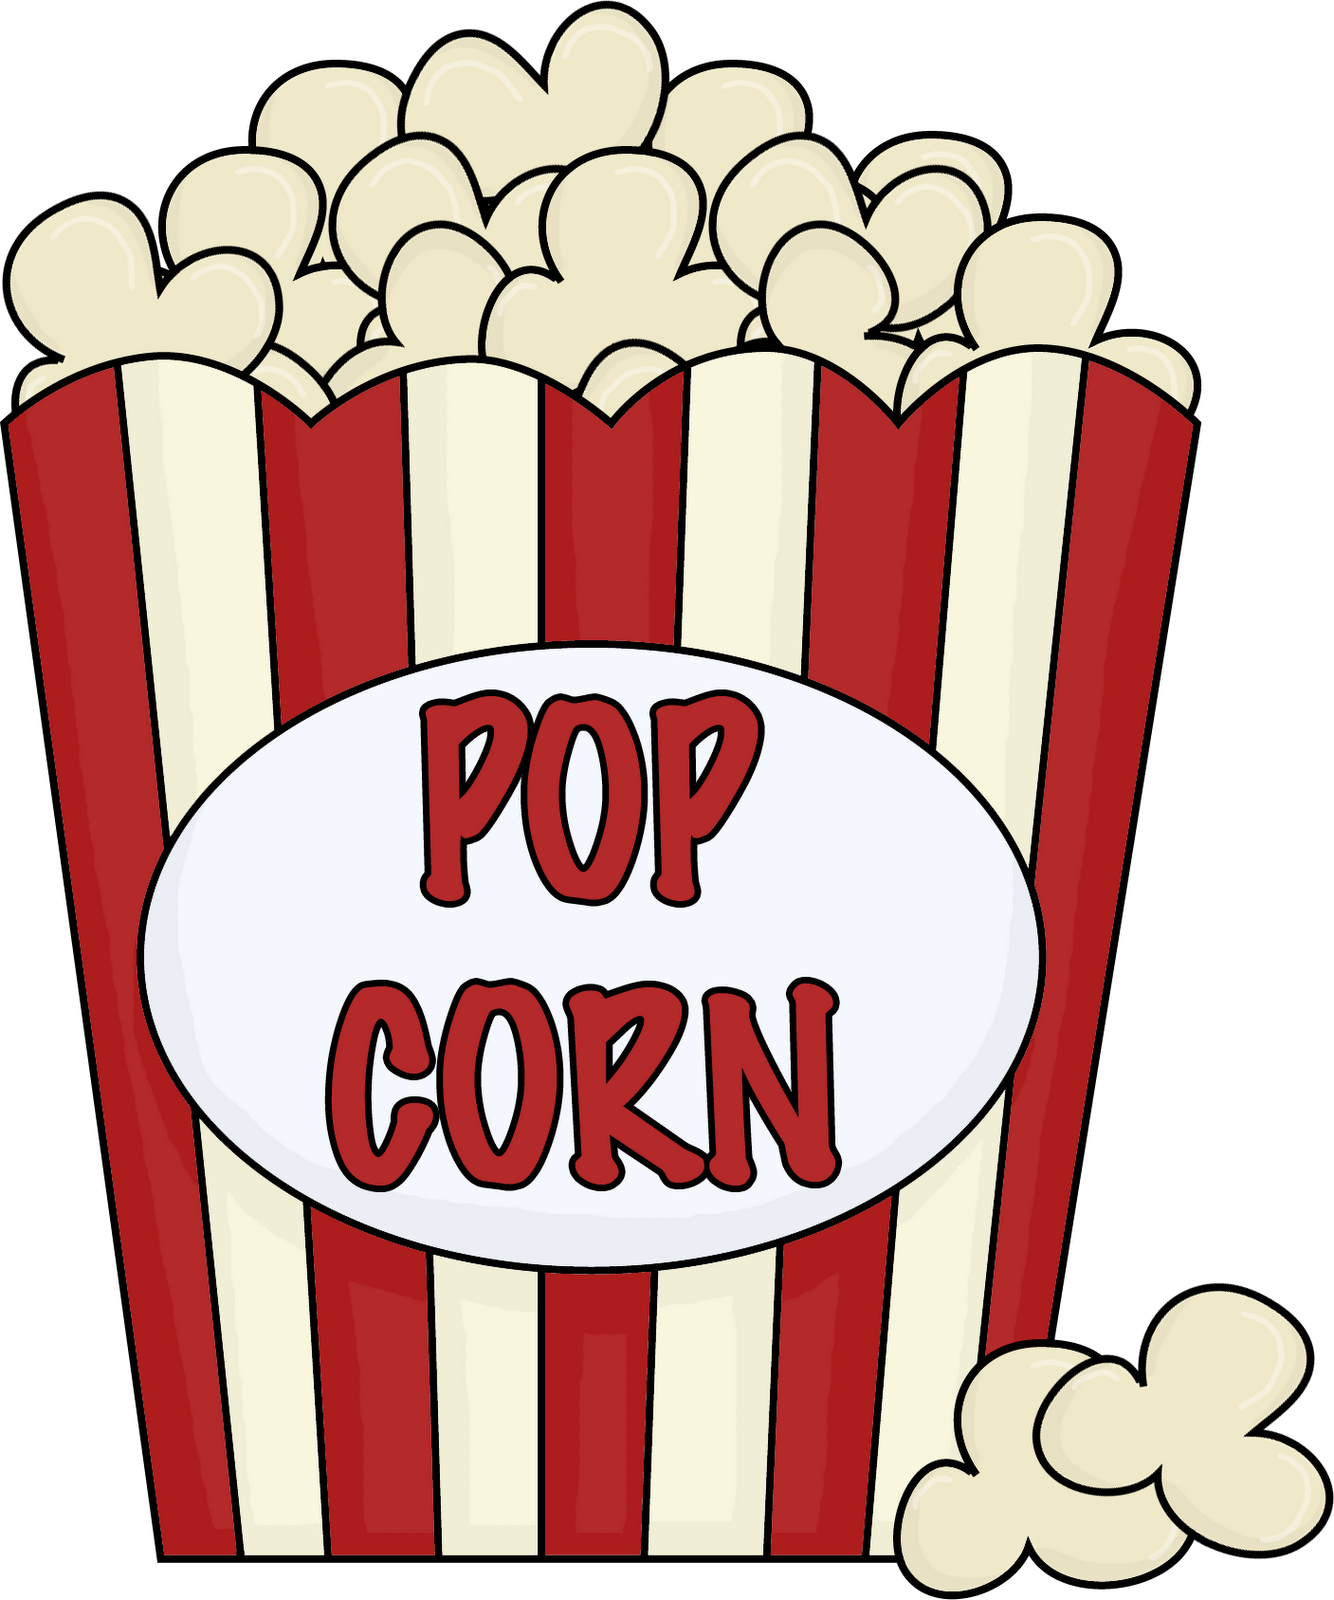 Popcorn clip art black and wh - Clipart Popcorn